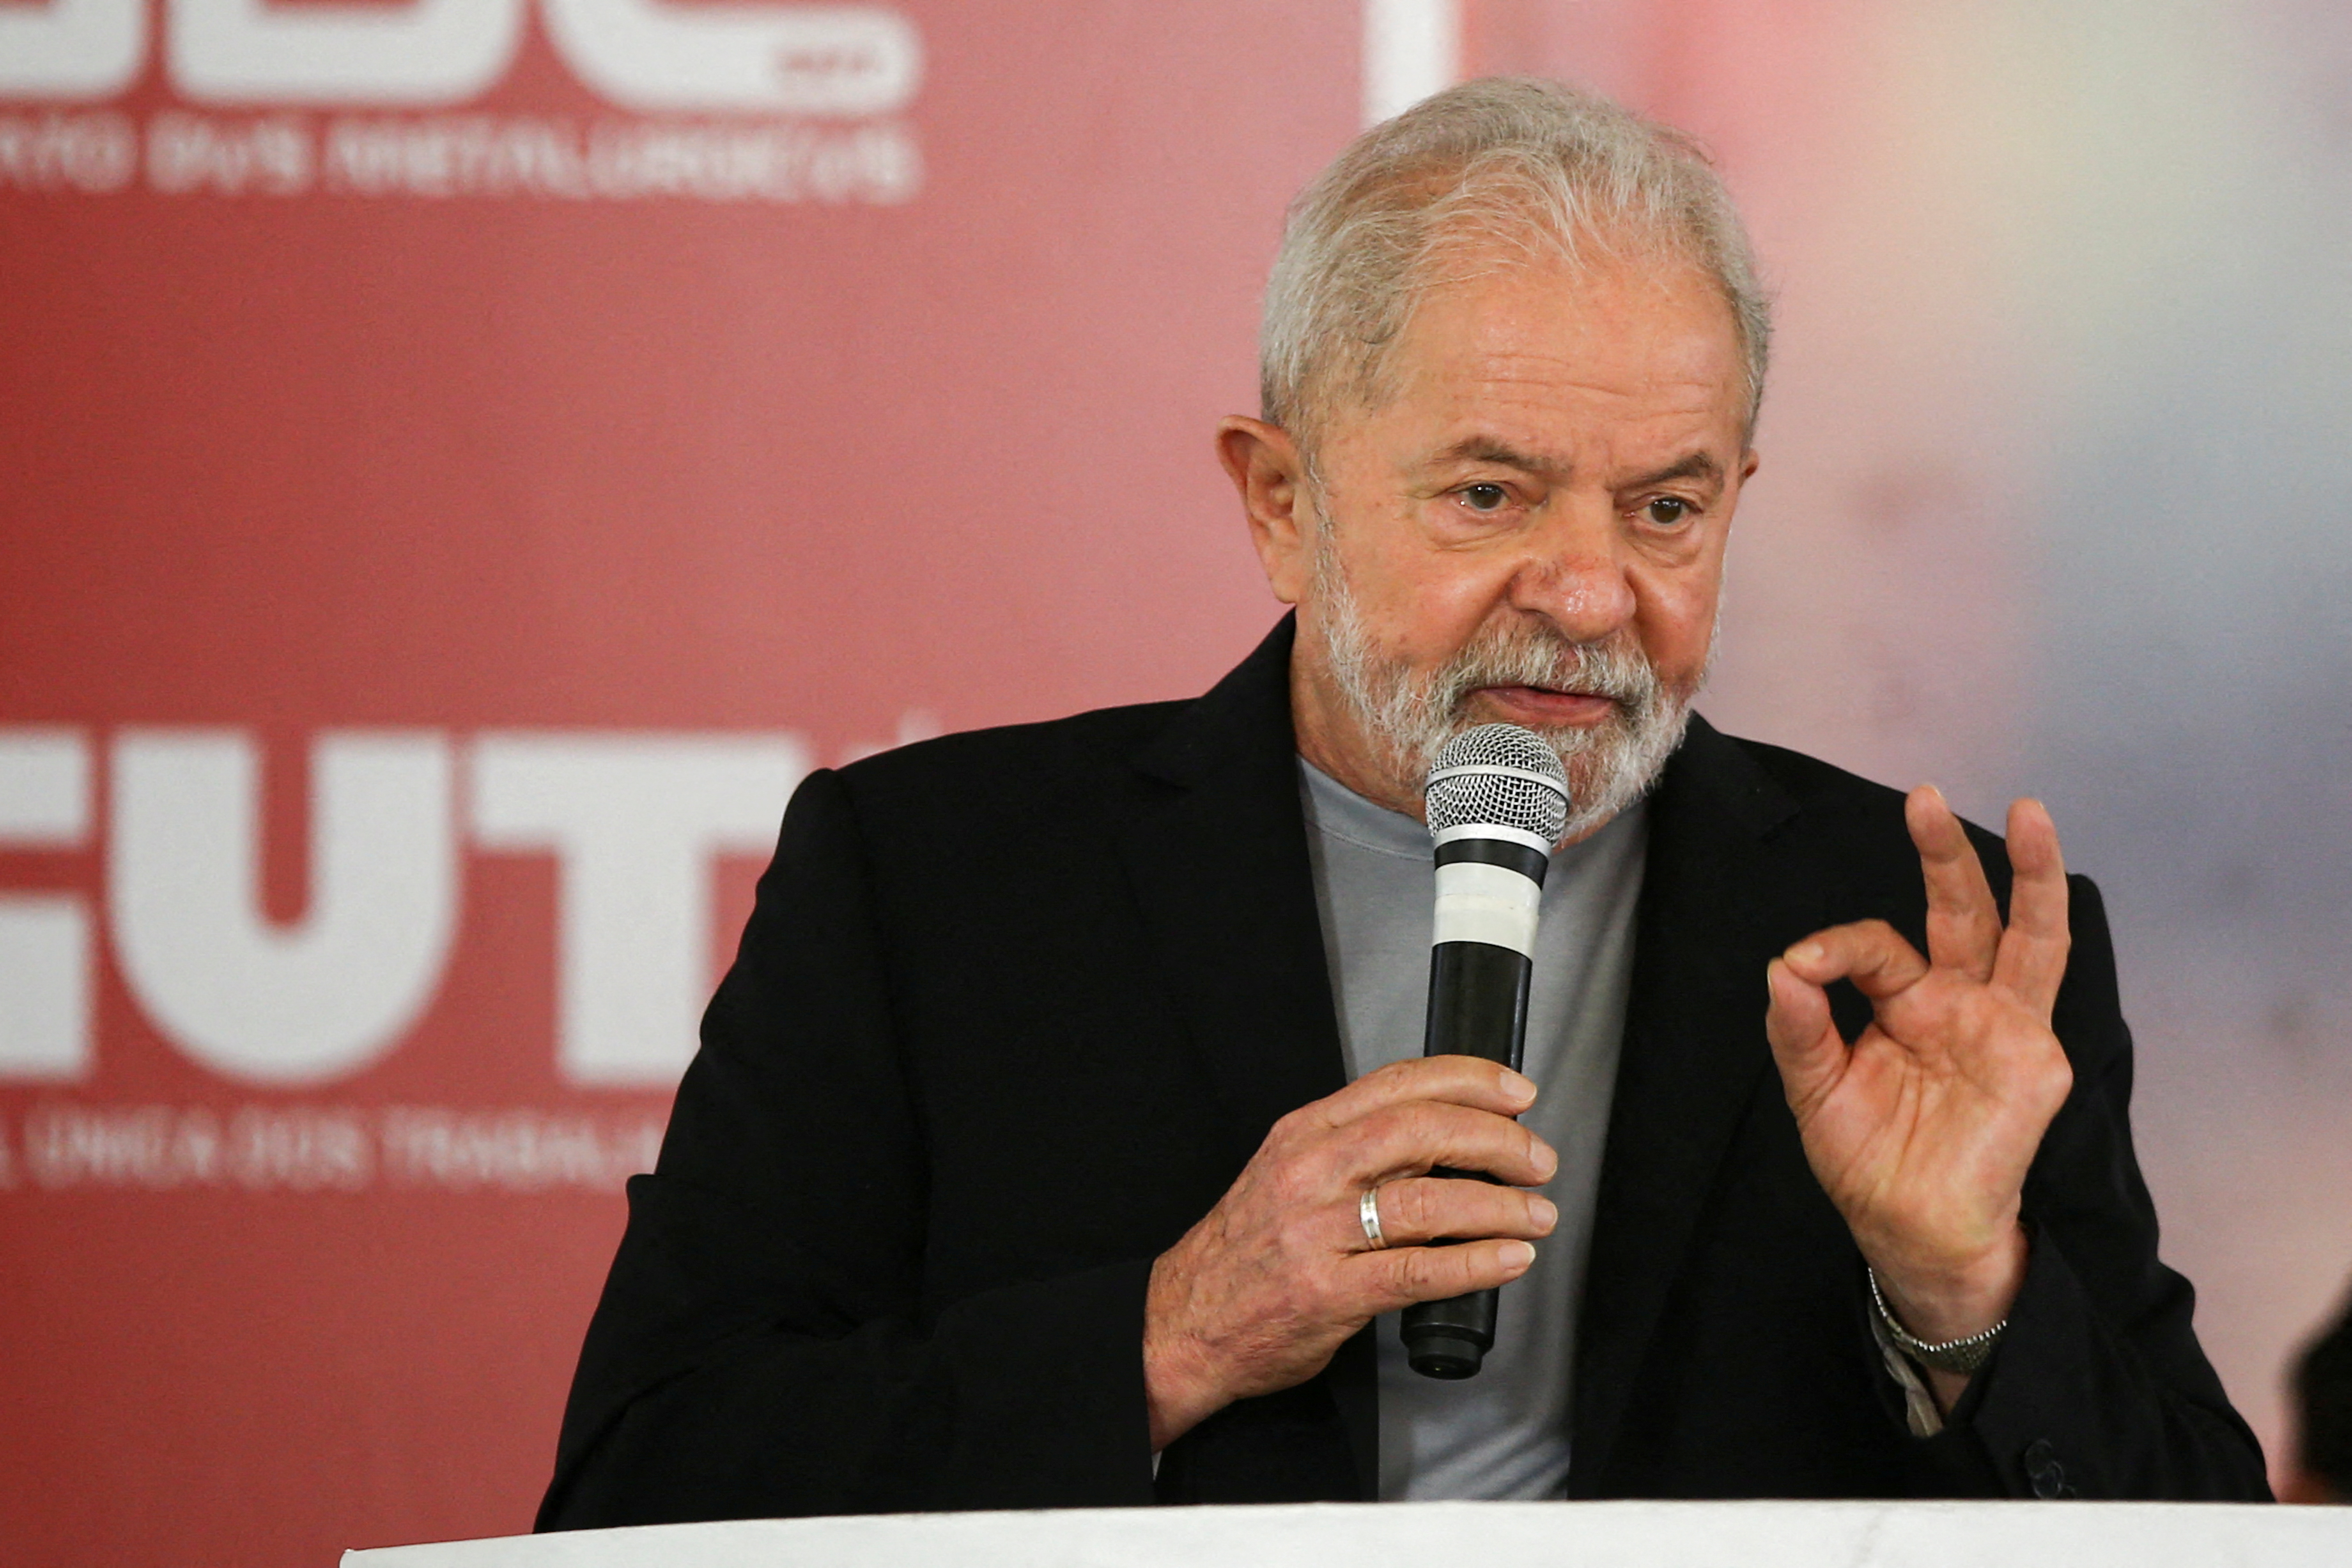 Brazil’s former President Lula speaks at Sindicato dos Metalurgicos do ABC, in Sao Bernardo do Campo